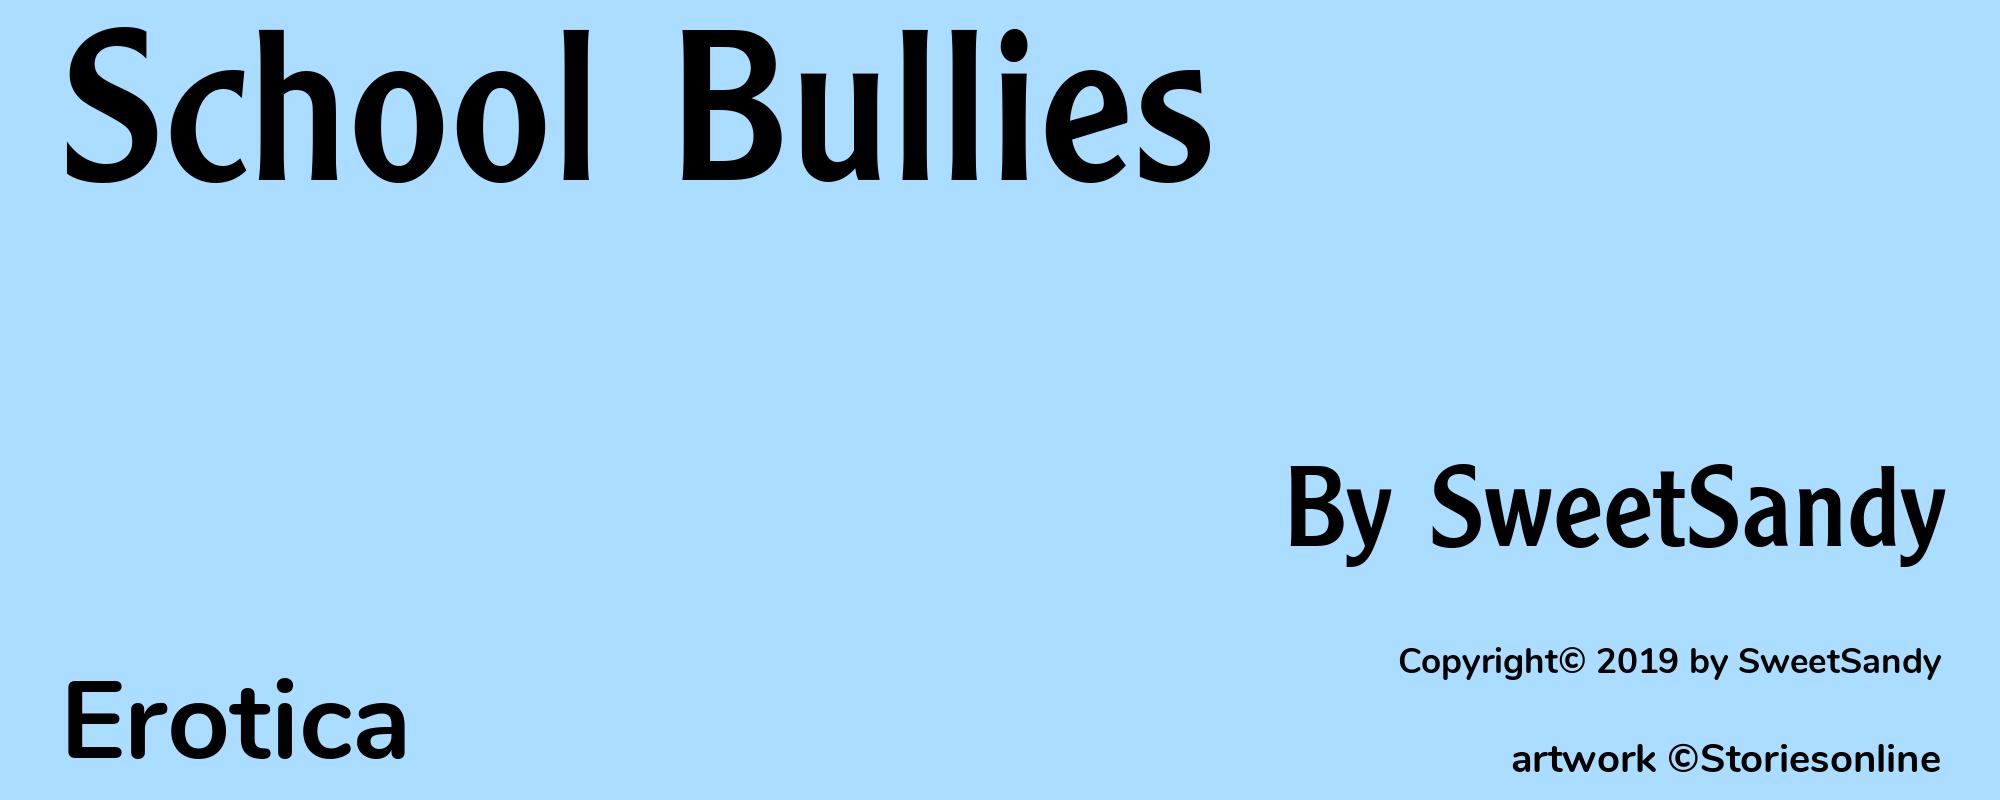 School Bullies - Cover